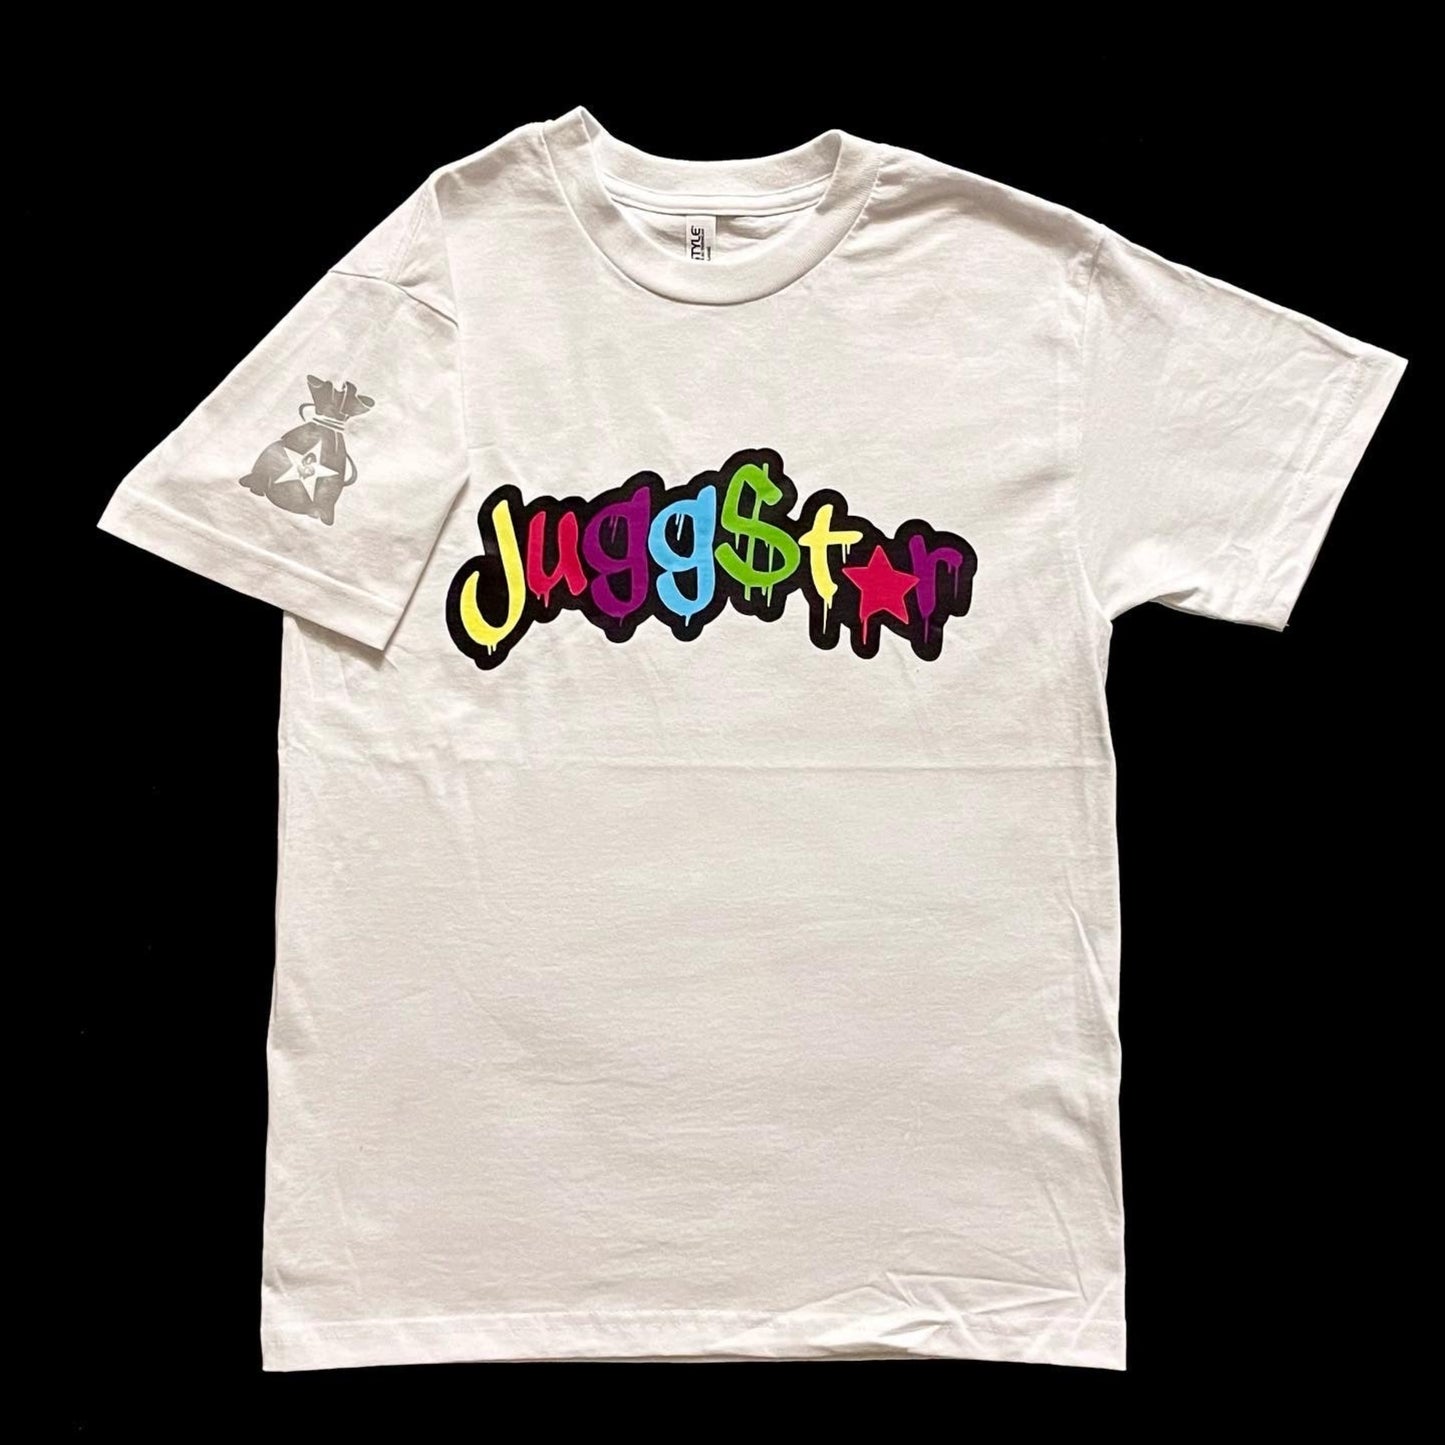 Jugg$tar Short Sleeve Tshirt - White